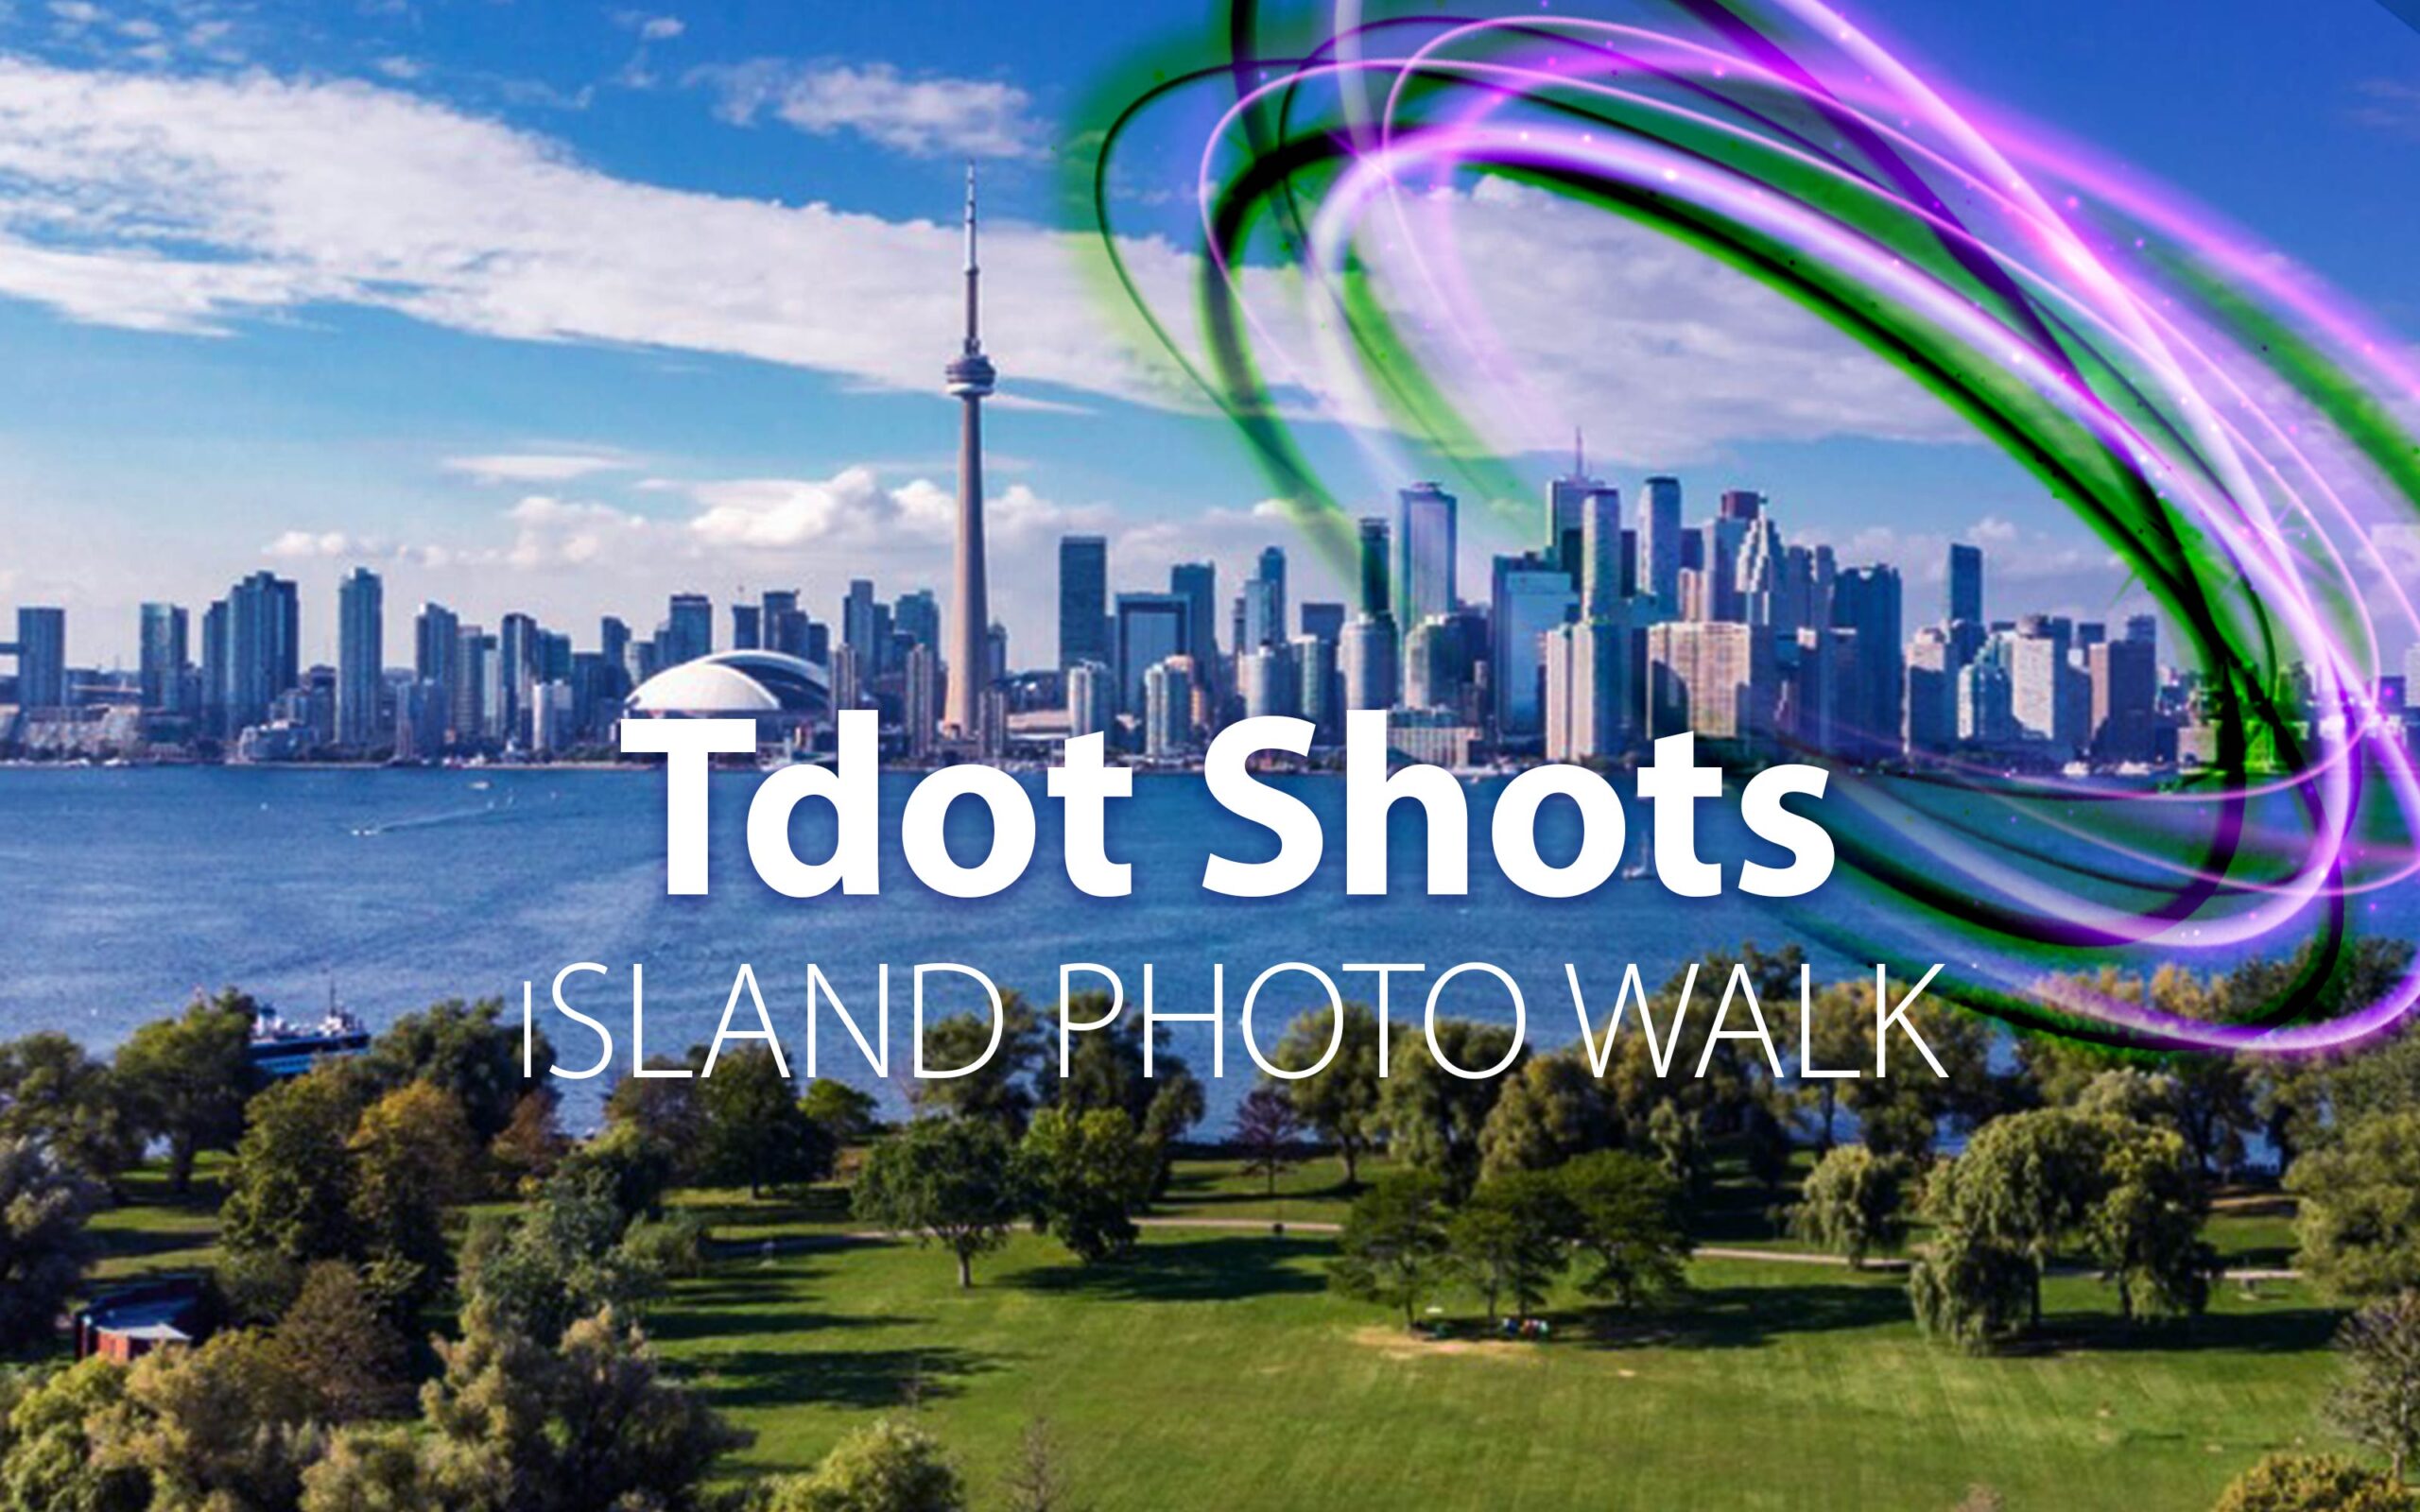 Toronto island photo walk by Tdot Shots